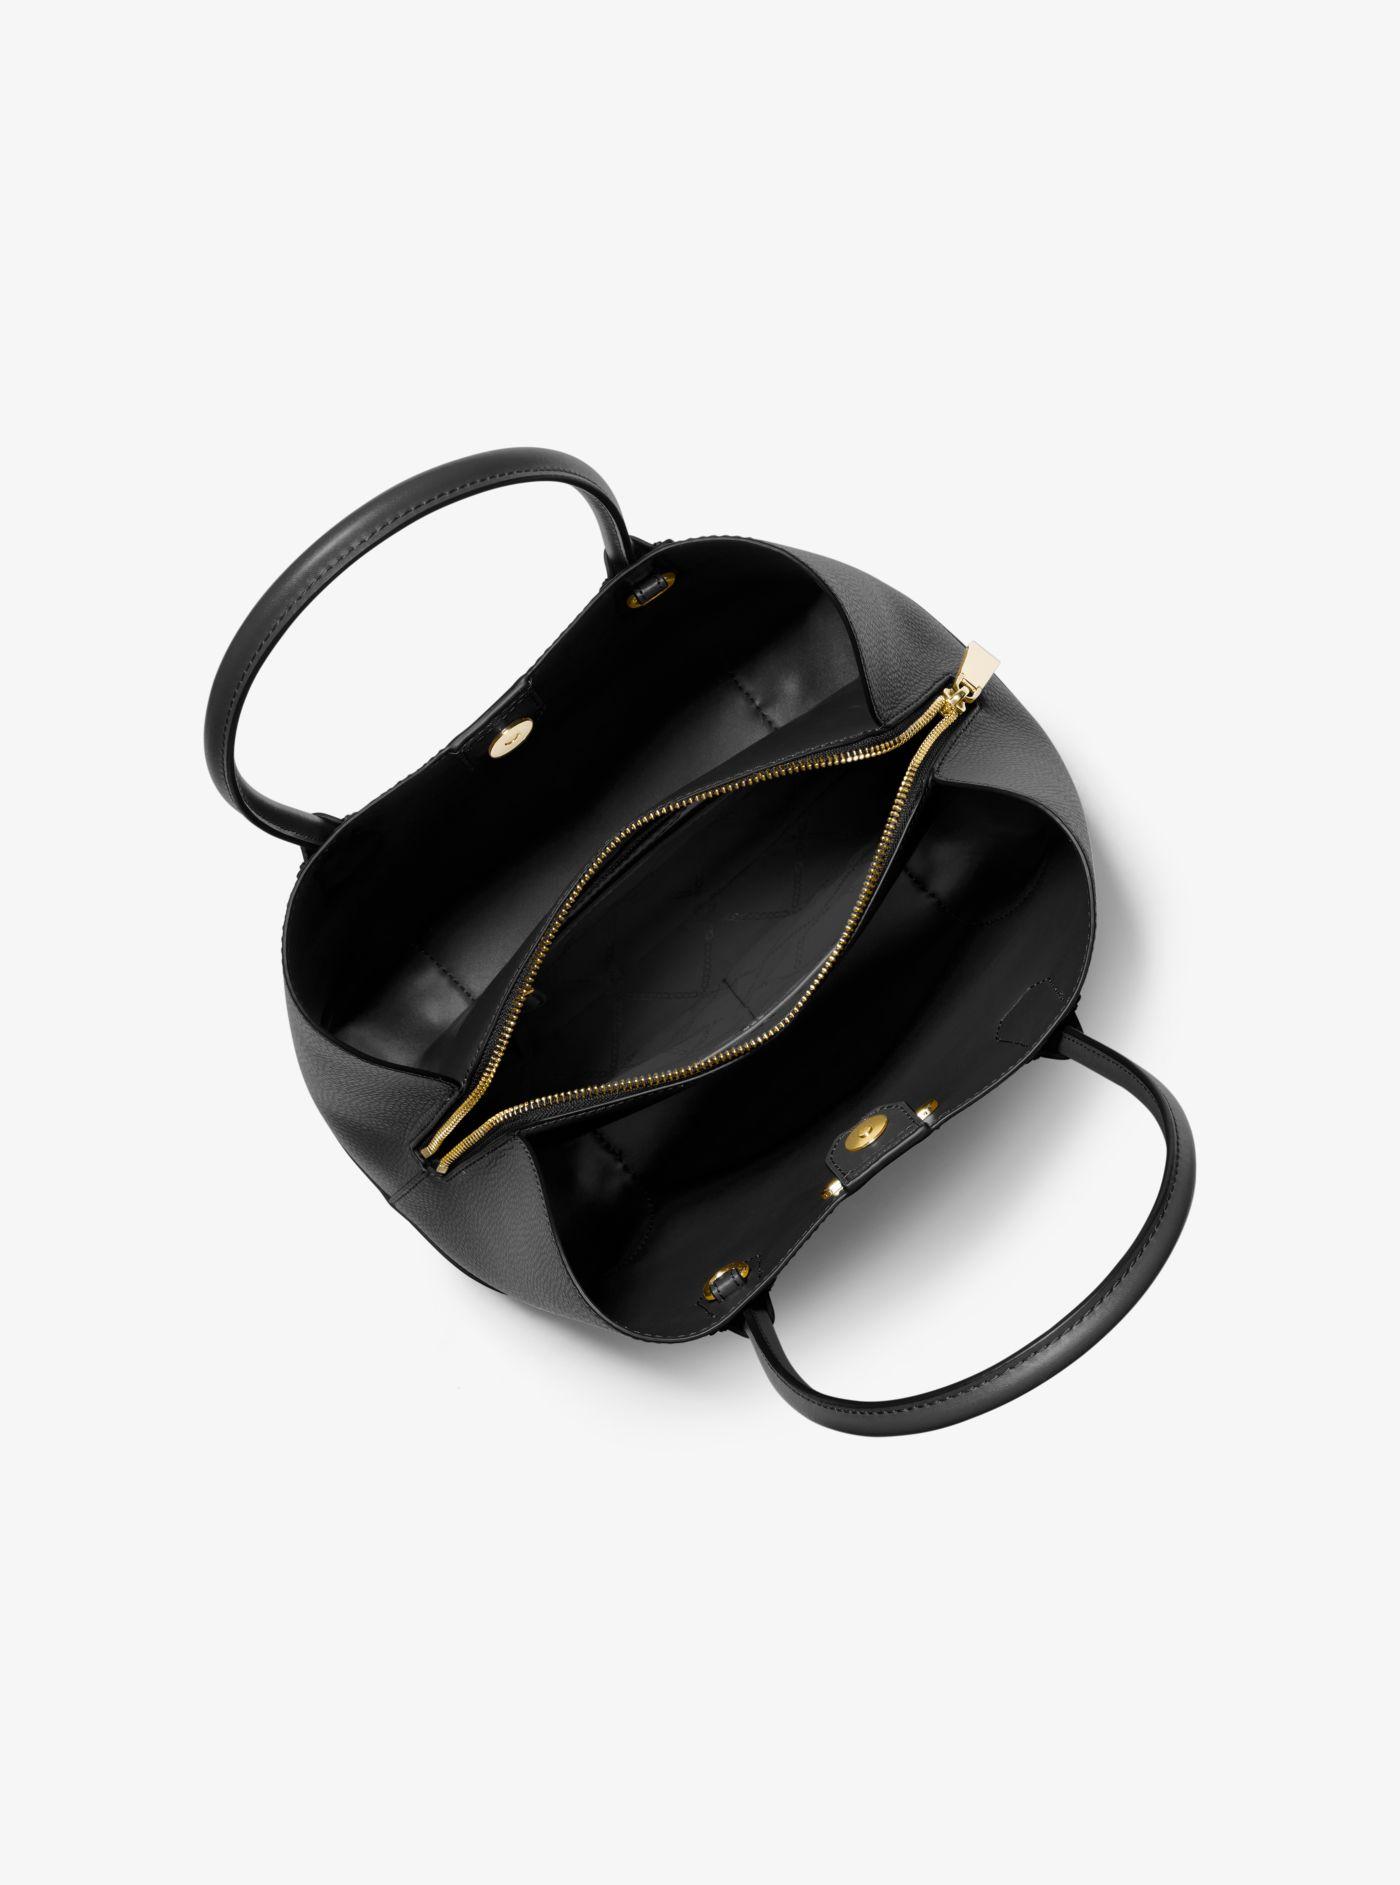 Michael Kors Mercer Gallery Medium Faux Pebbled Leather Tote Bag in Black |  Lyst